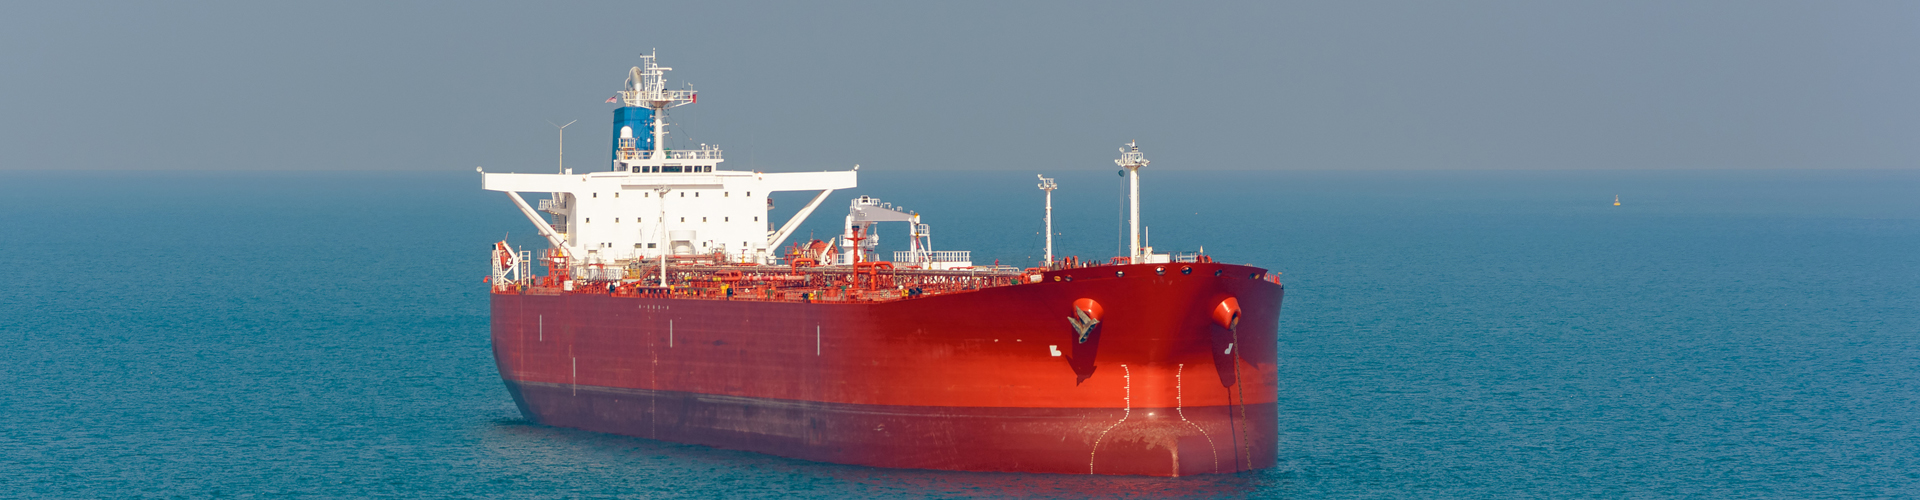 Crude Oil Exports | #LiftTheBan | Oil & Gas Policy | IPAA